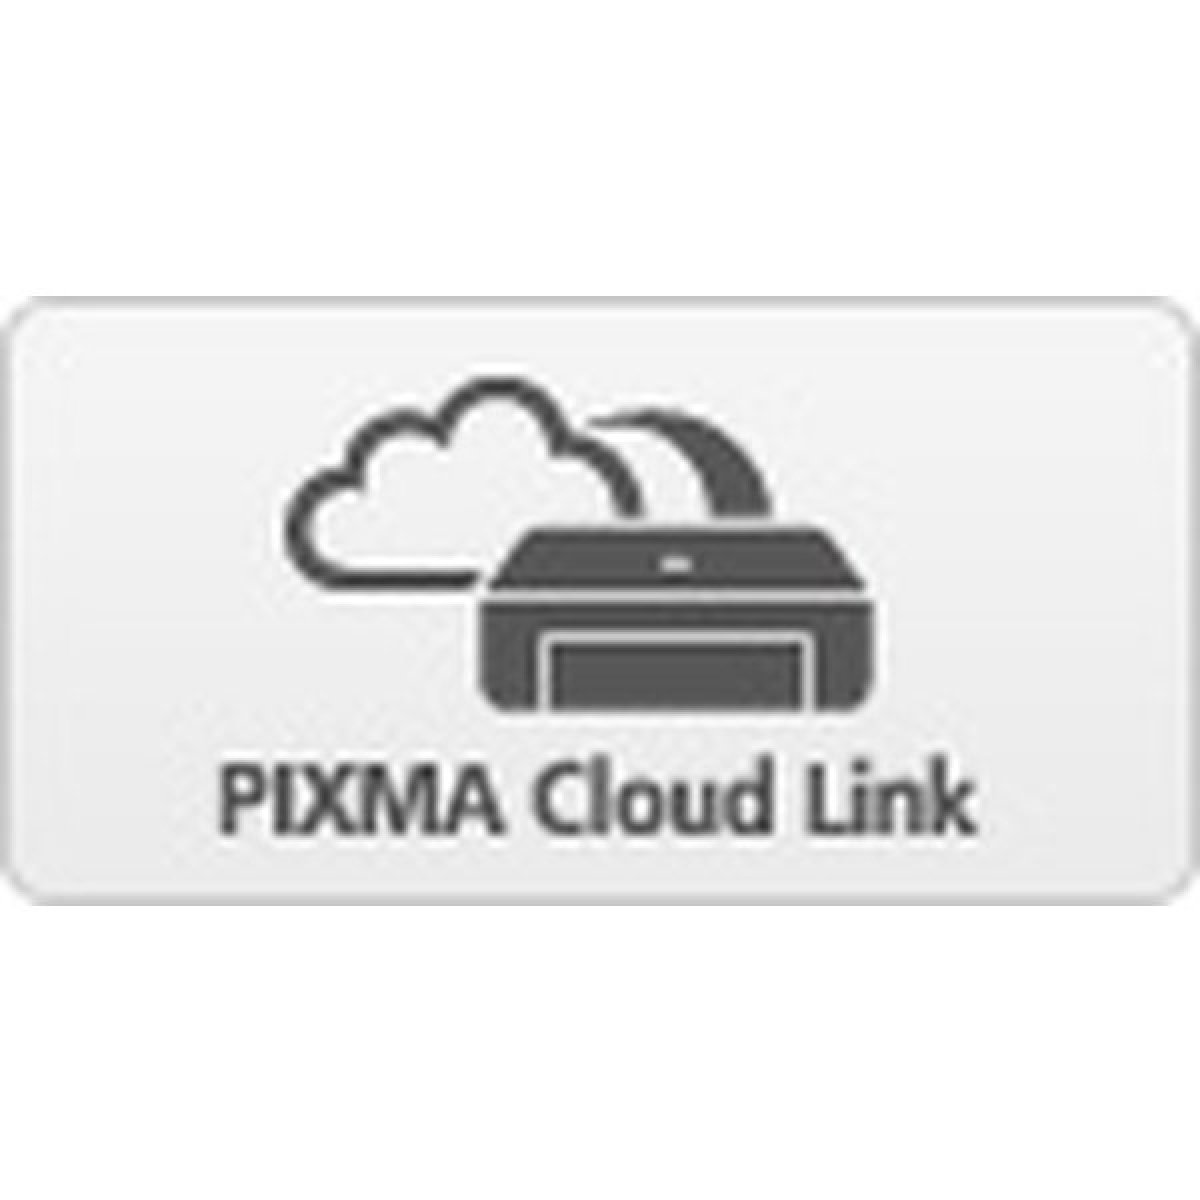 Pixma Cloud Link